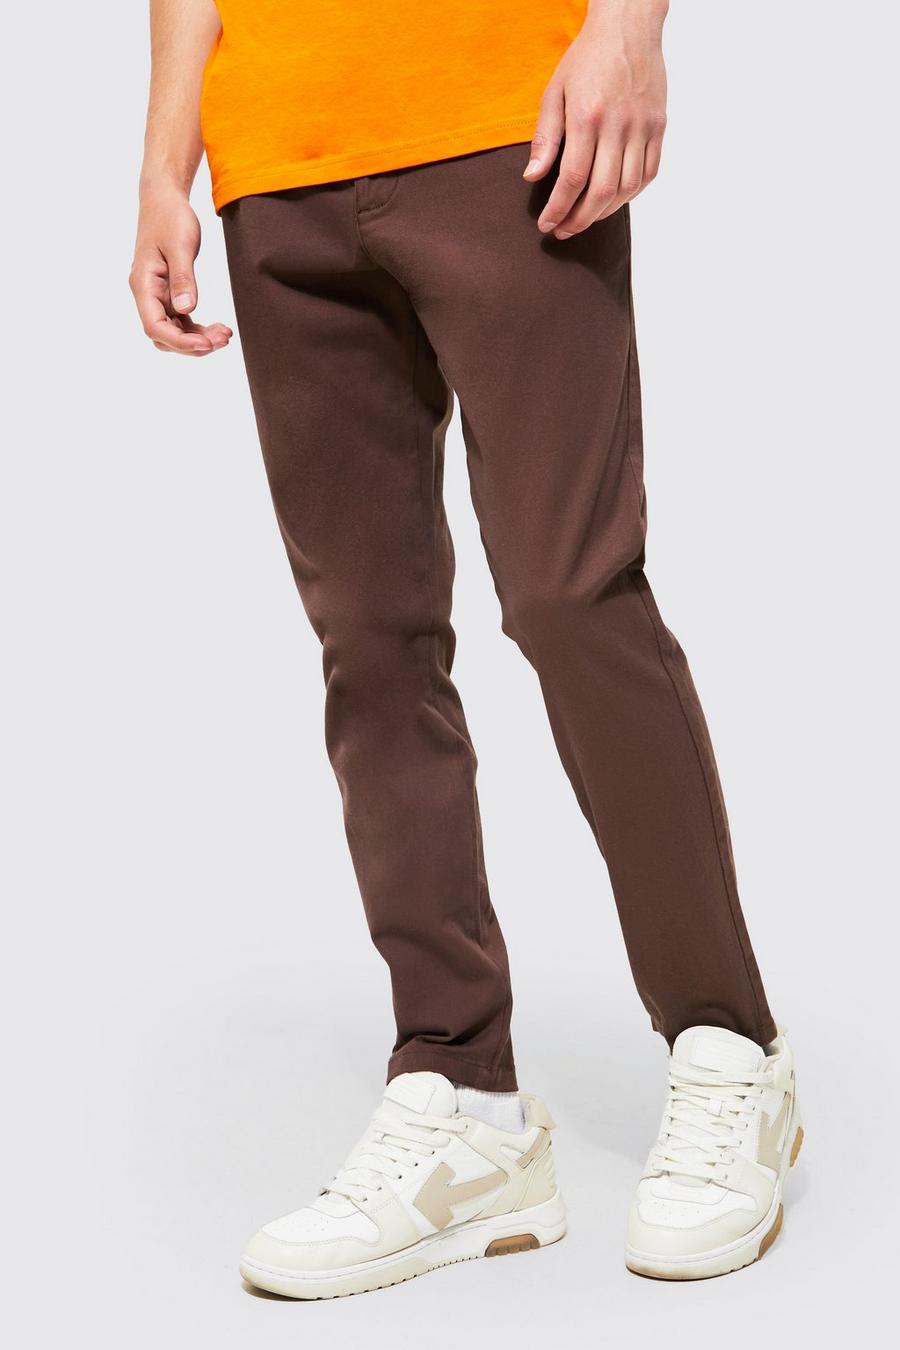 Pantaloni Chino Skinny Fit, Chocolate marrone